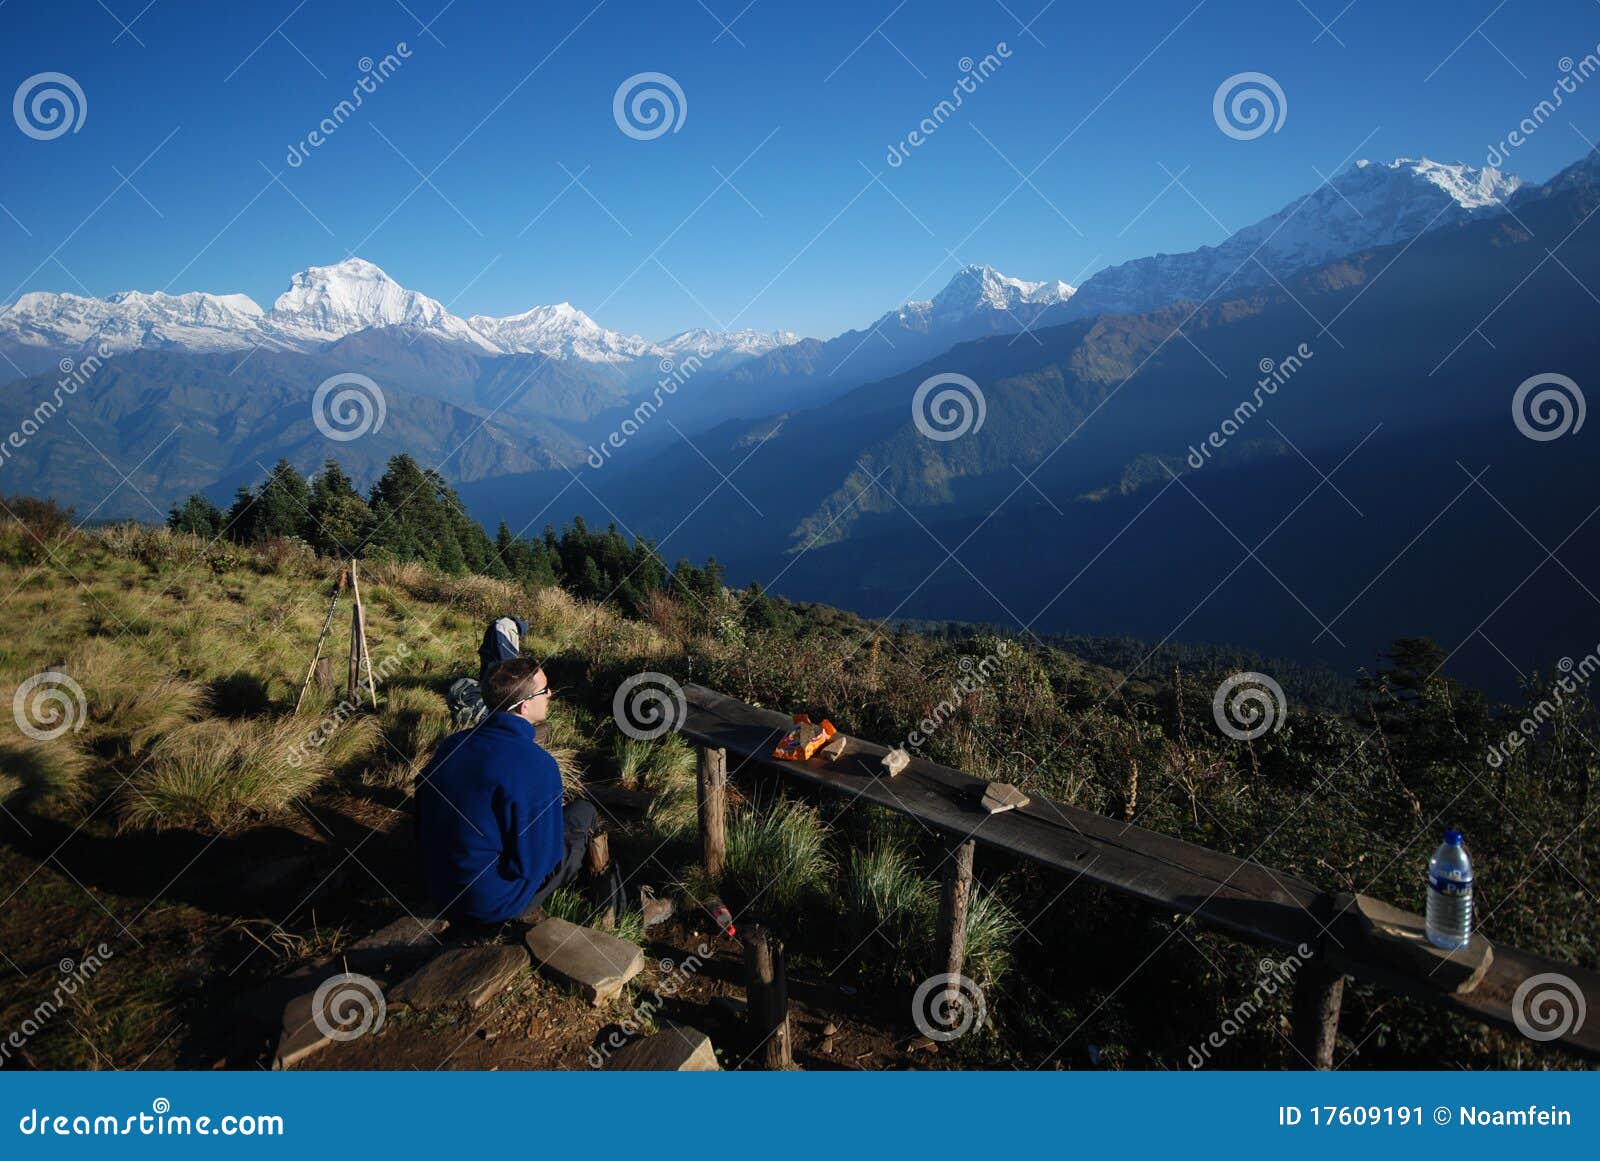 tourist in nepal enjoying the views